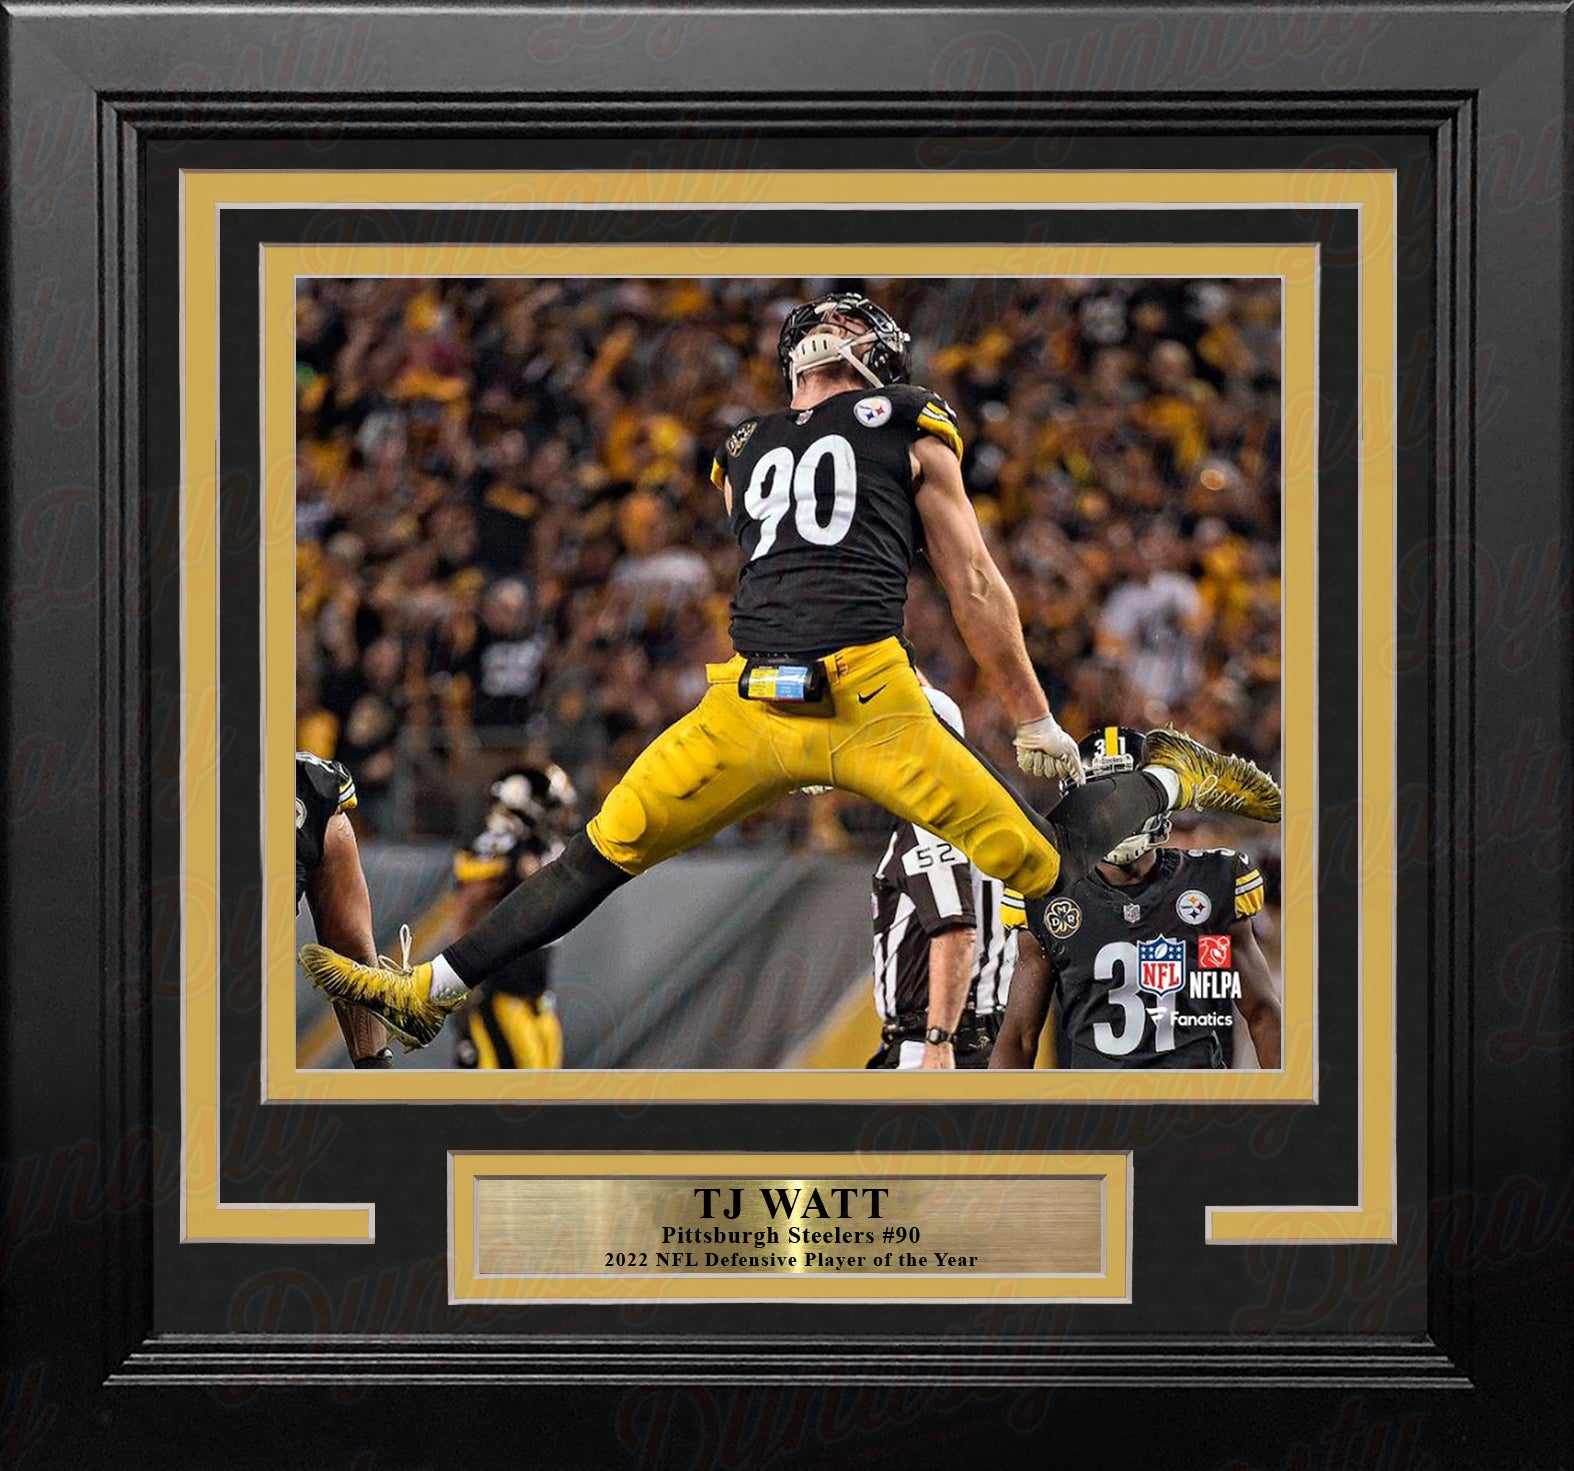 TJ Watt Celebration Pittsburgh Steelers 8' x 10' Framed Football Photo -  Dynasty Sports & Framing